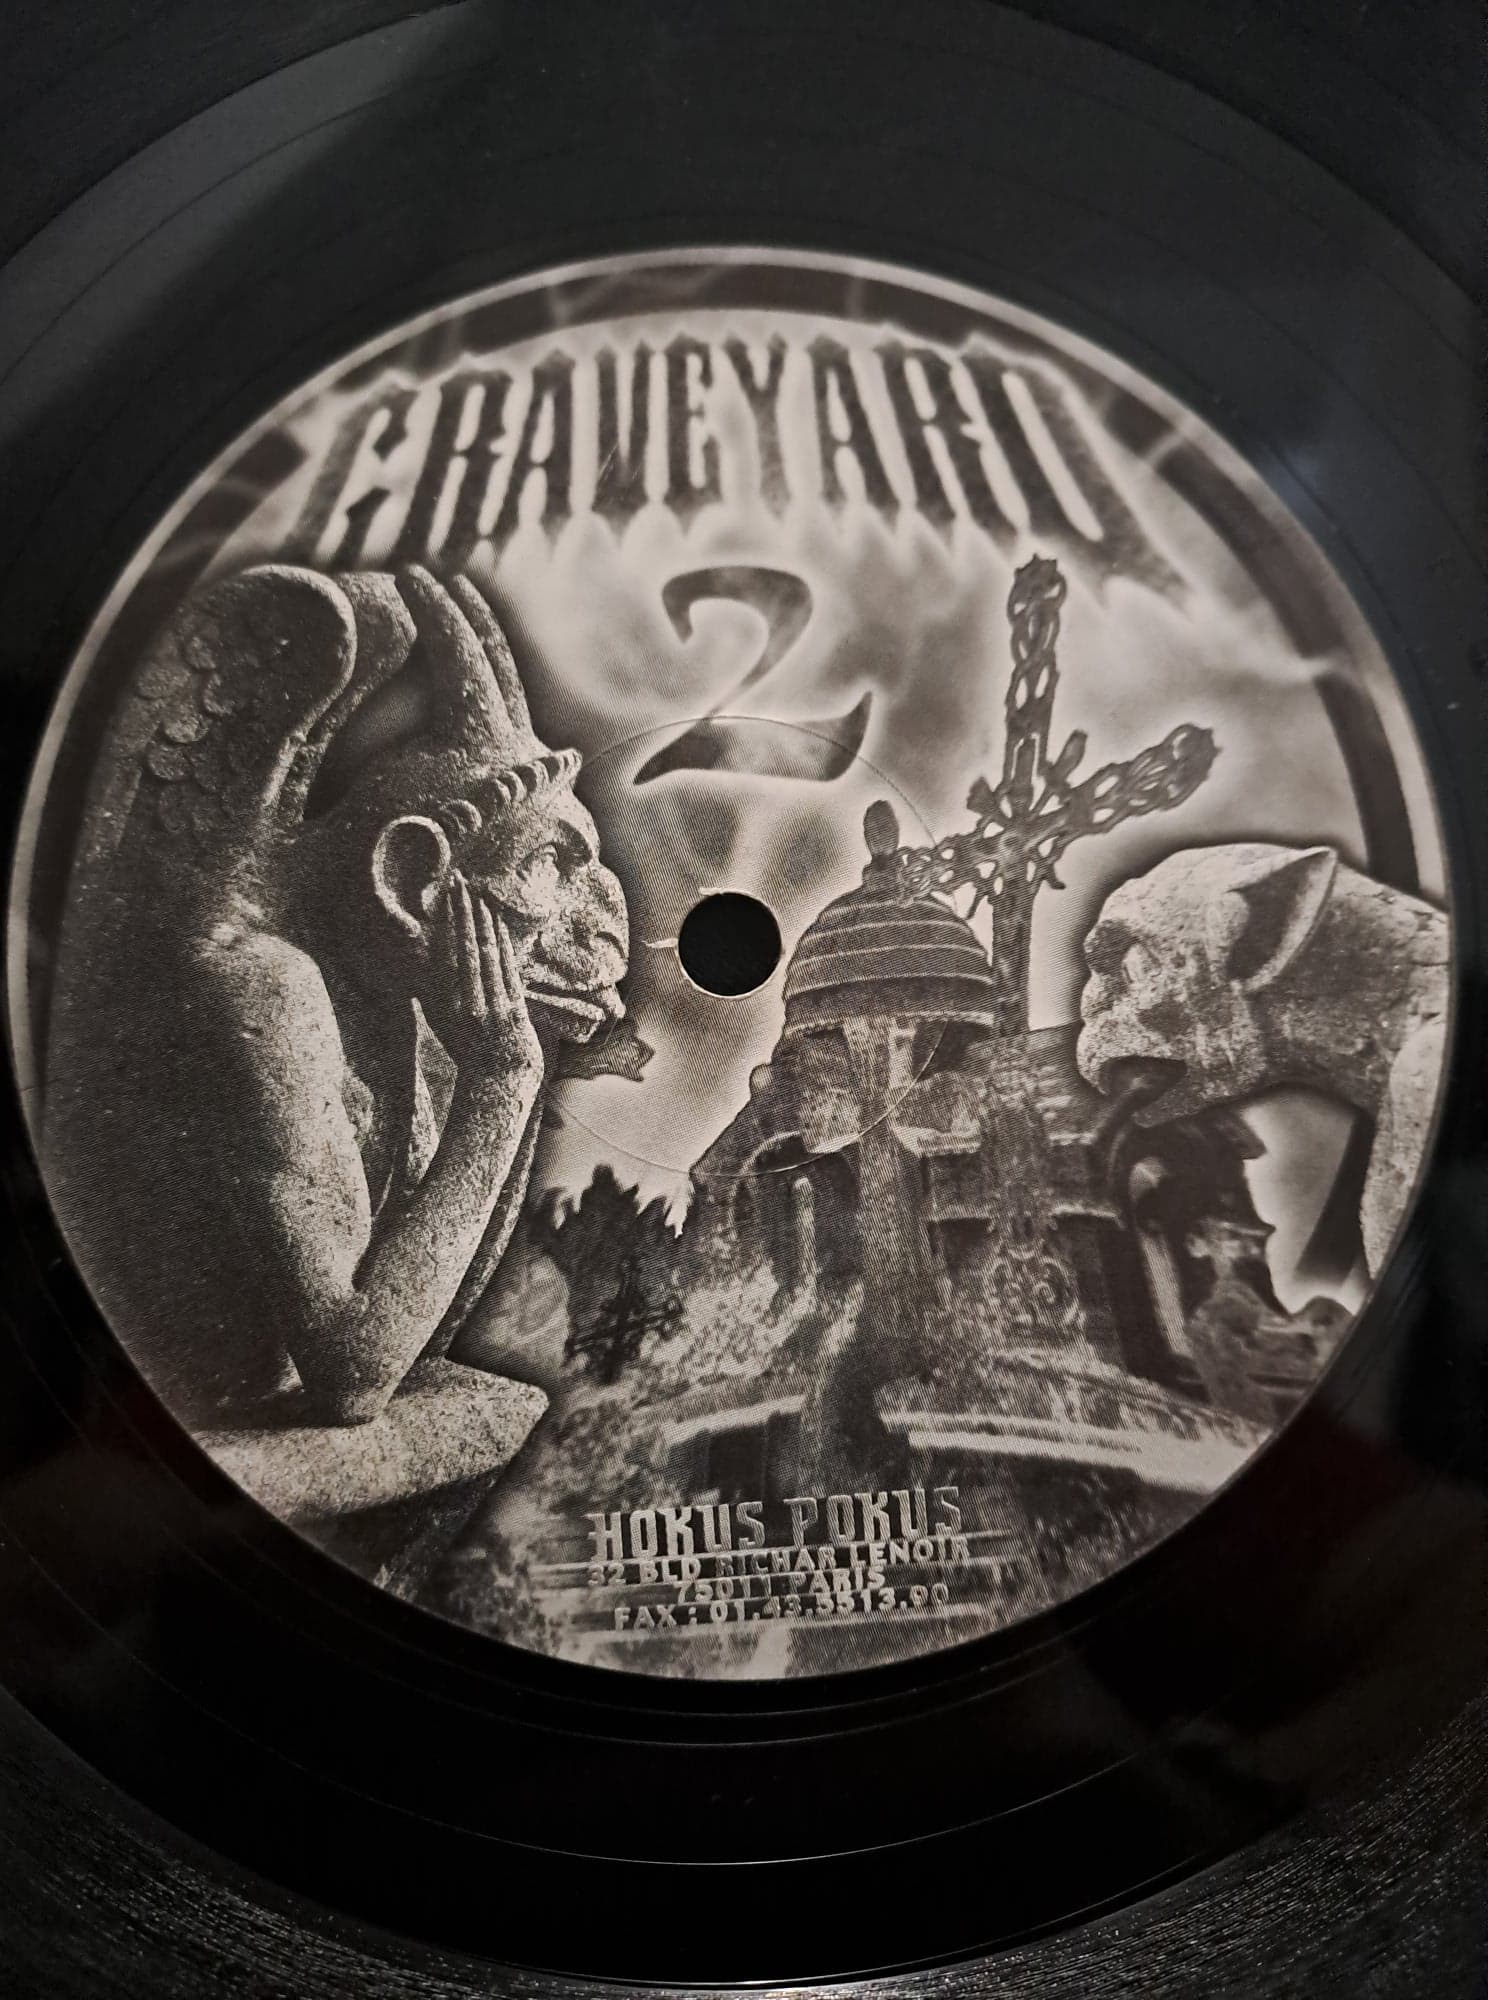 Graveyard 02 - vinyle hardcore